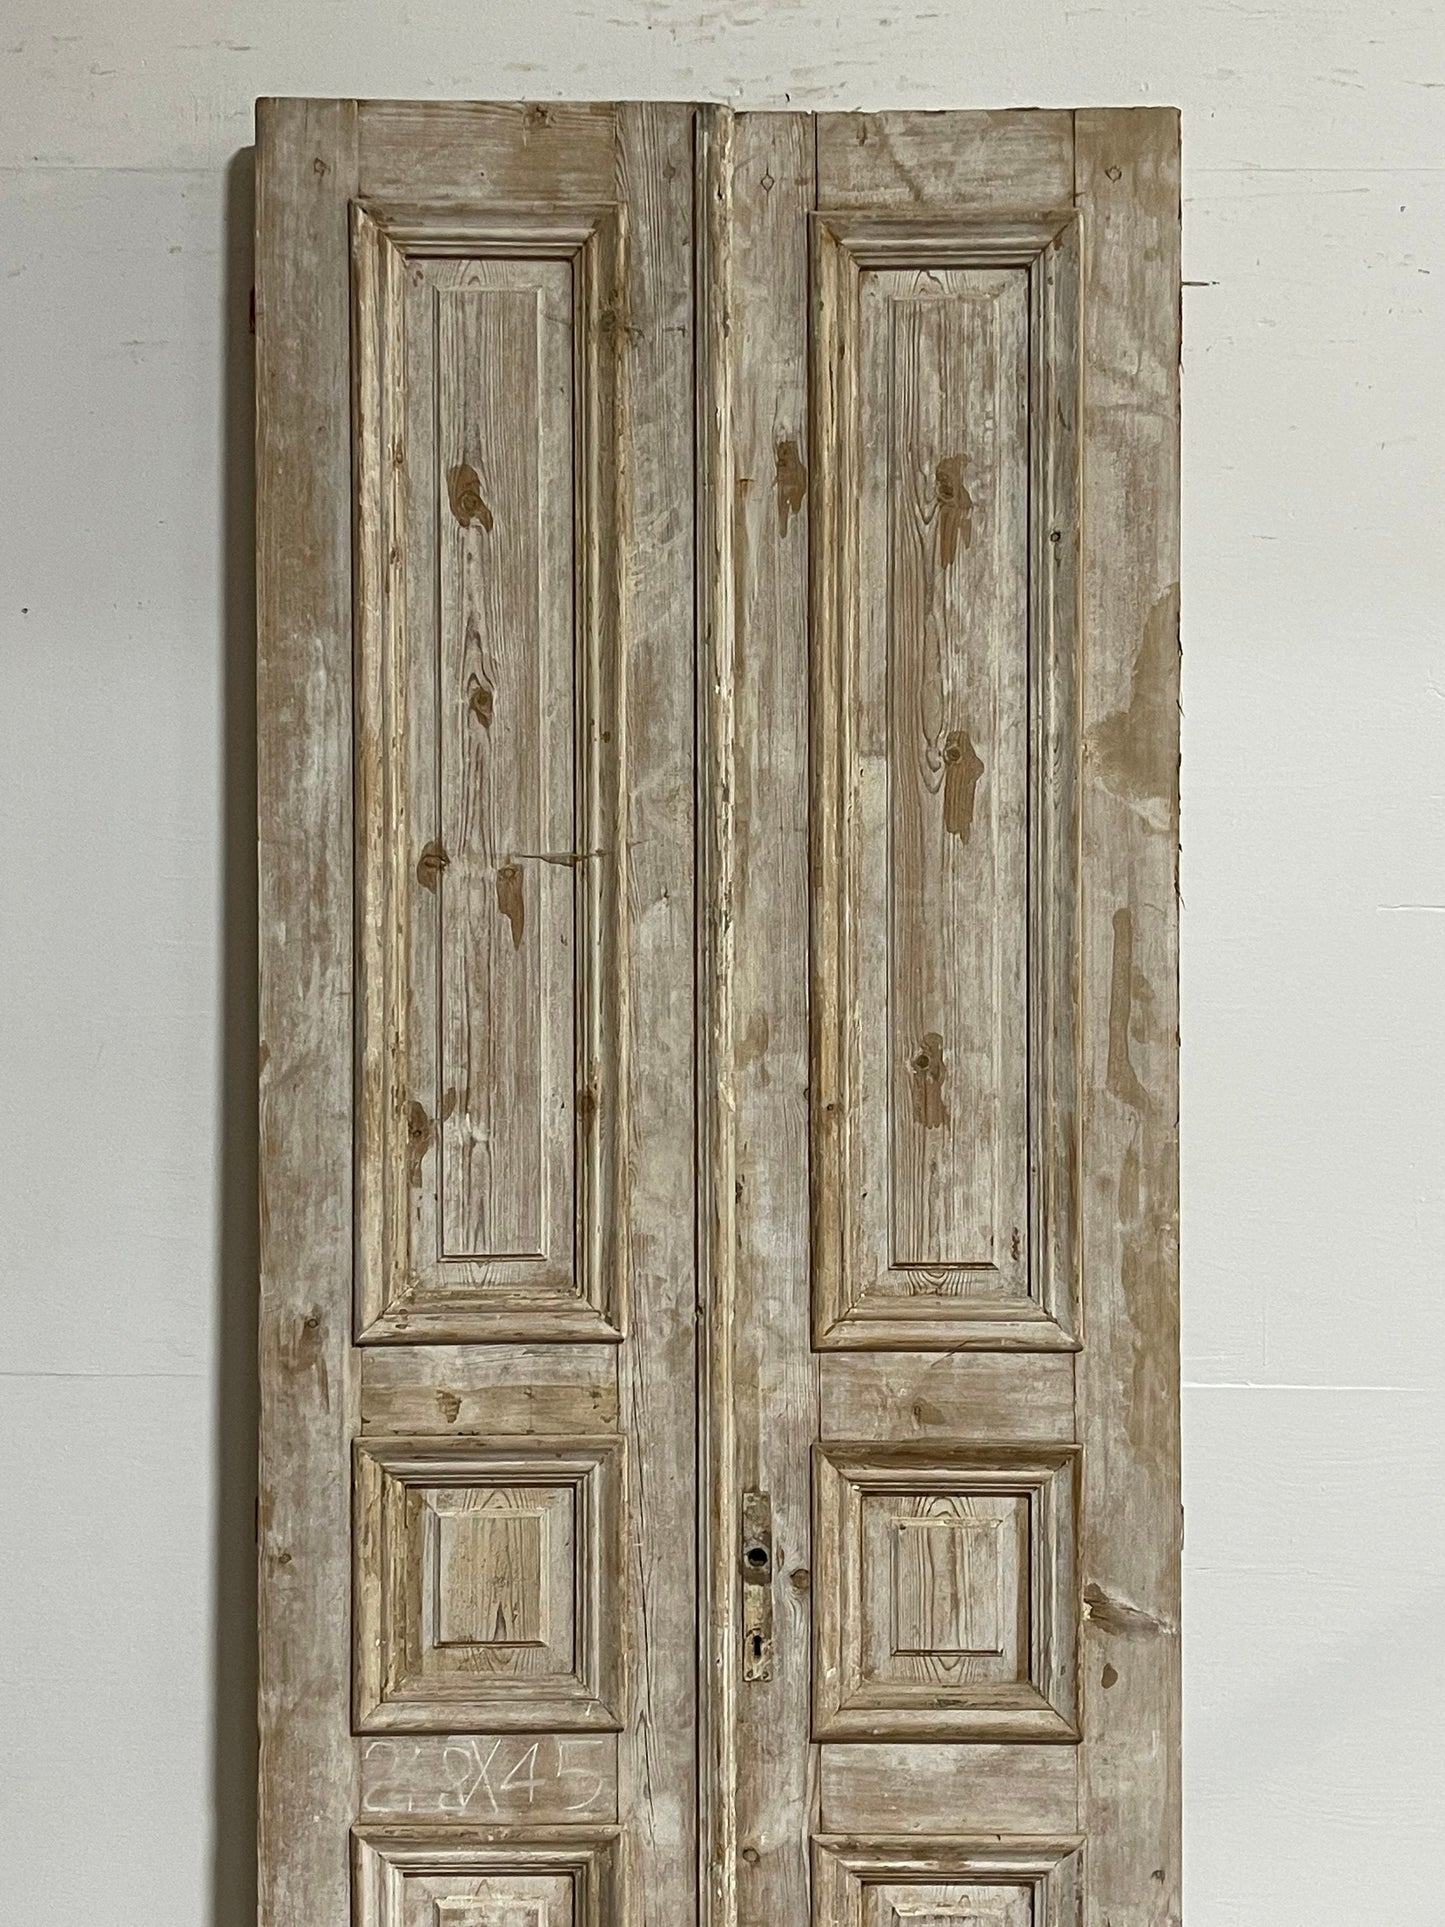 Antique French panel doors (97.75x35.5) H0037s